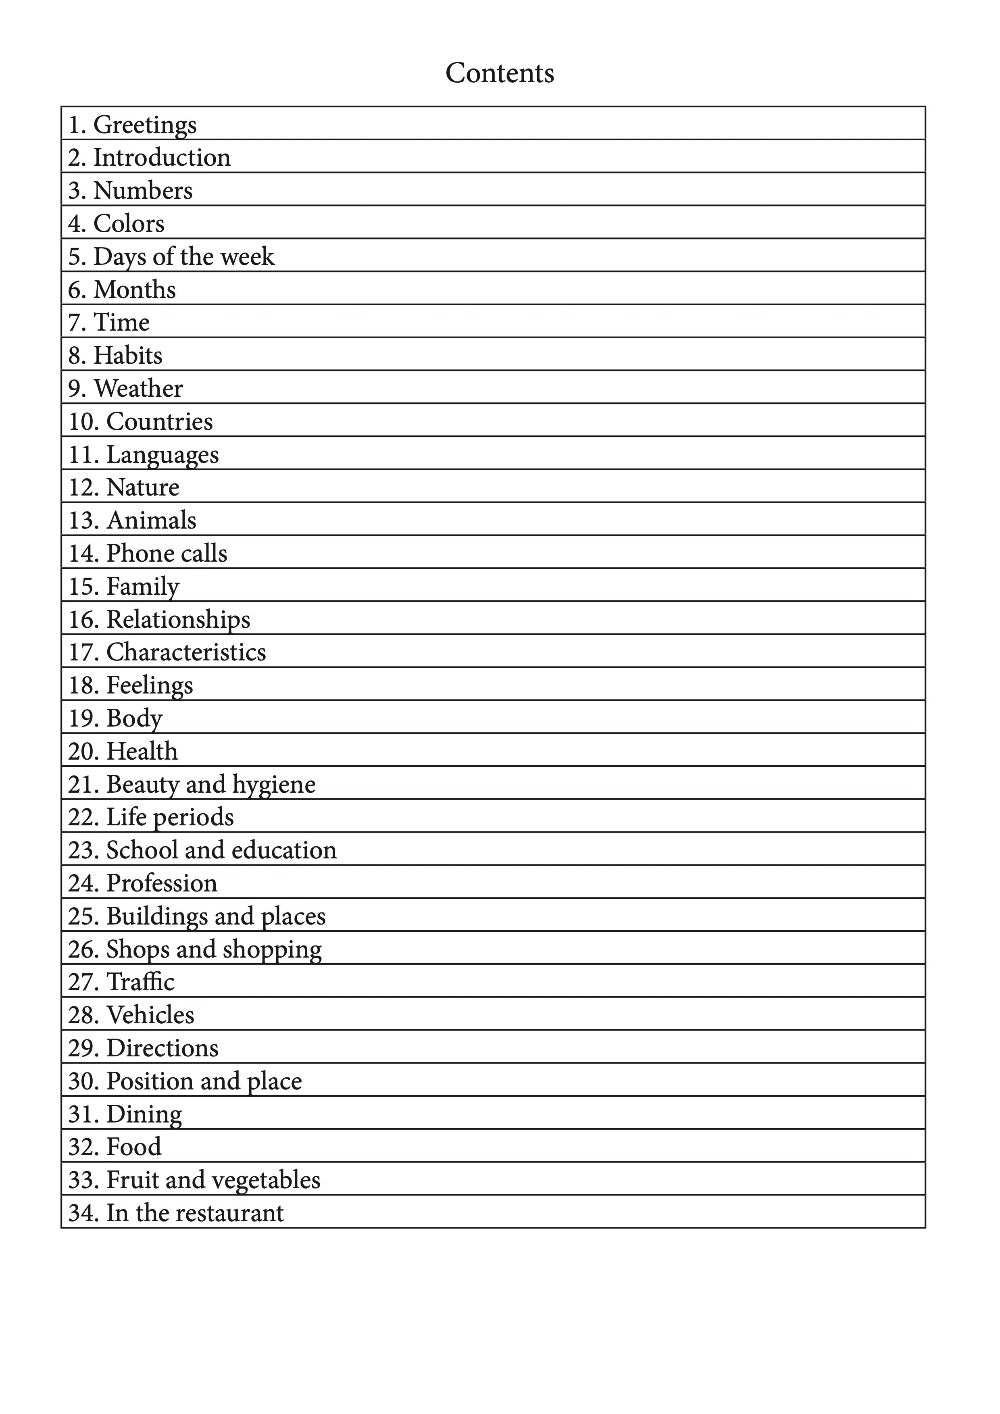 Intha Danu language learning notebook contents page 1